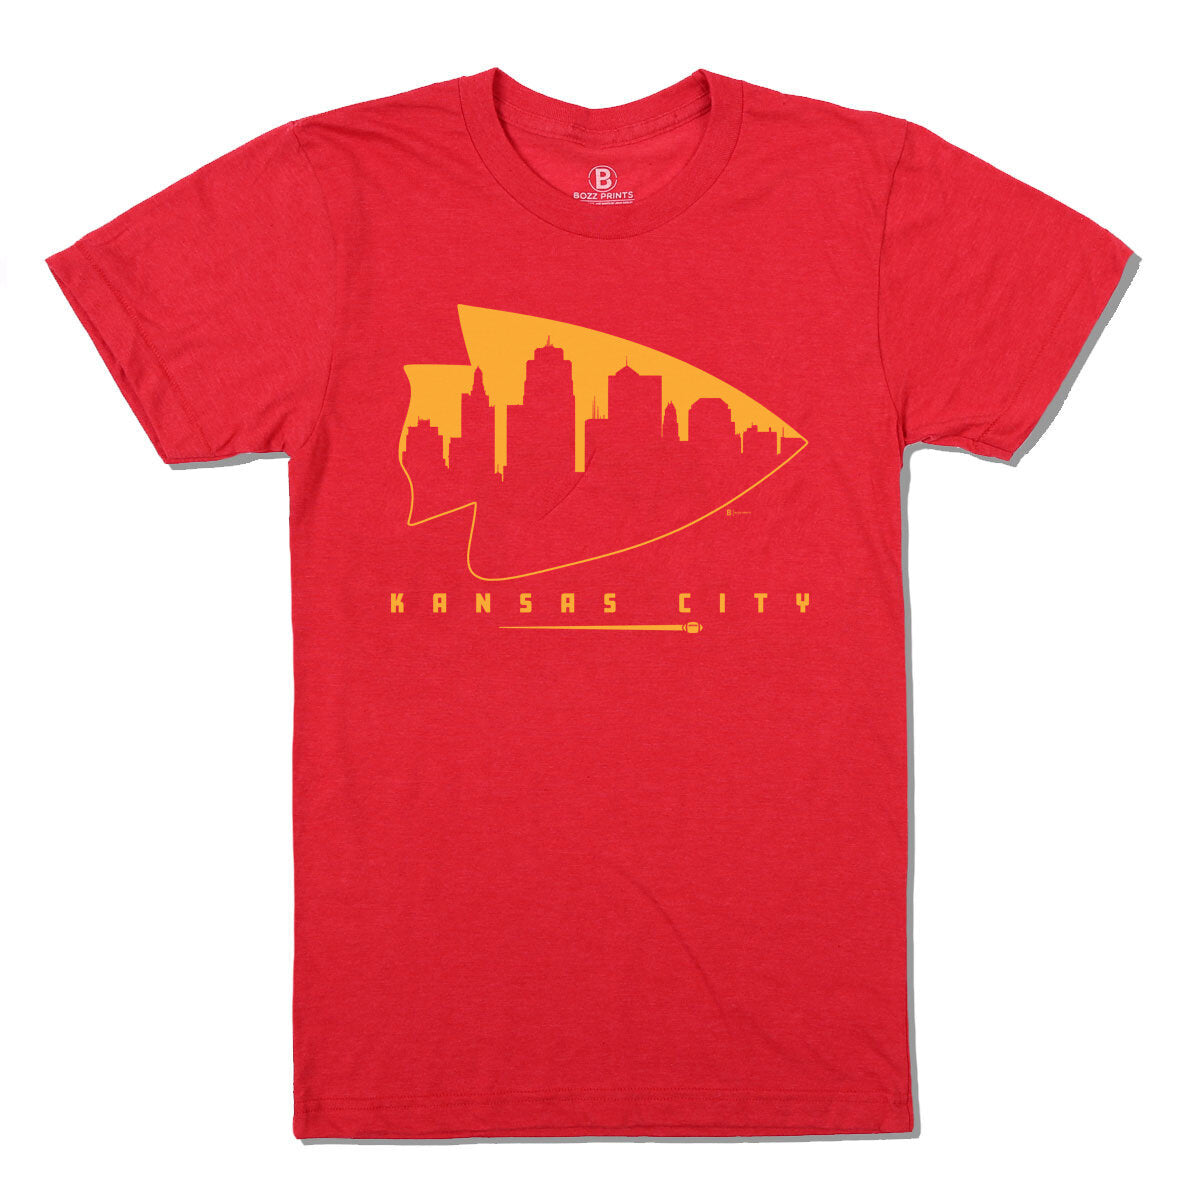 Cheap T-shirt Printing   Kansas City MO ...